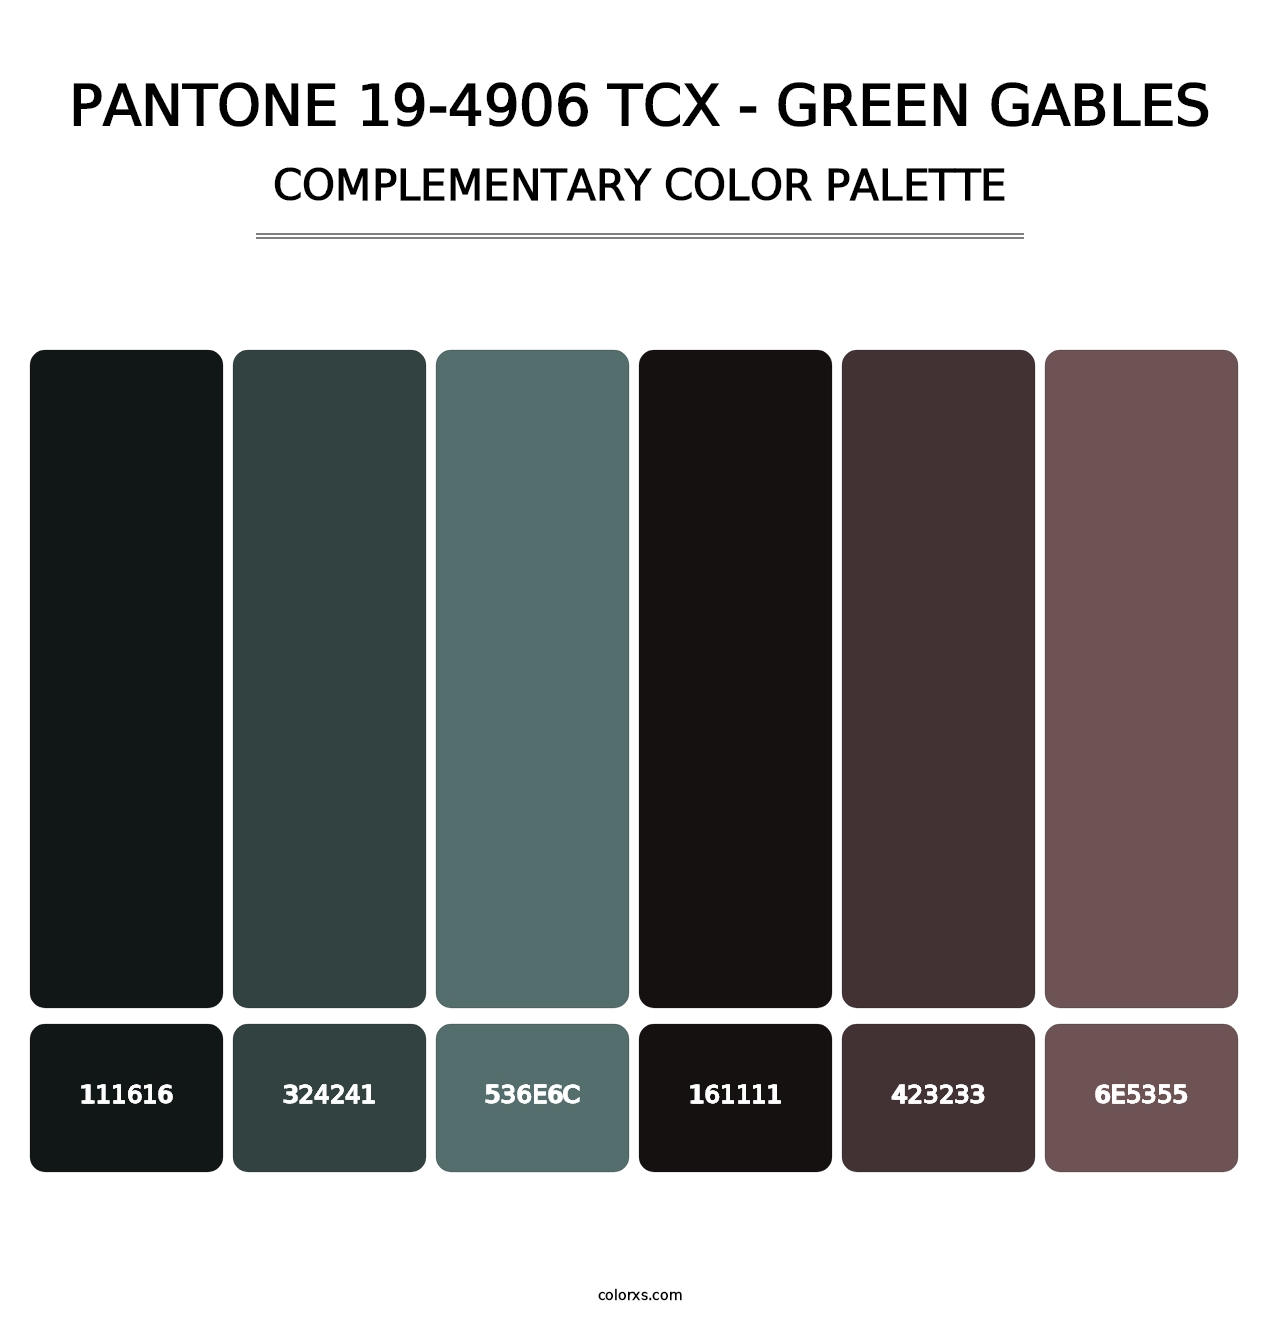 PANTONE 19-4906 TCX - Green Gables - Complementary Color Palette